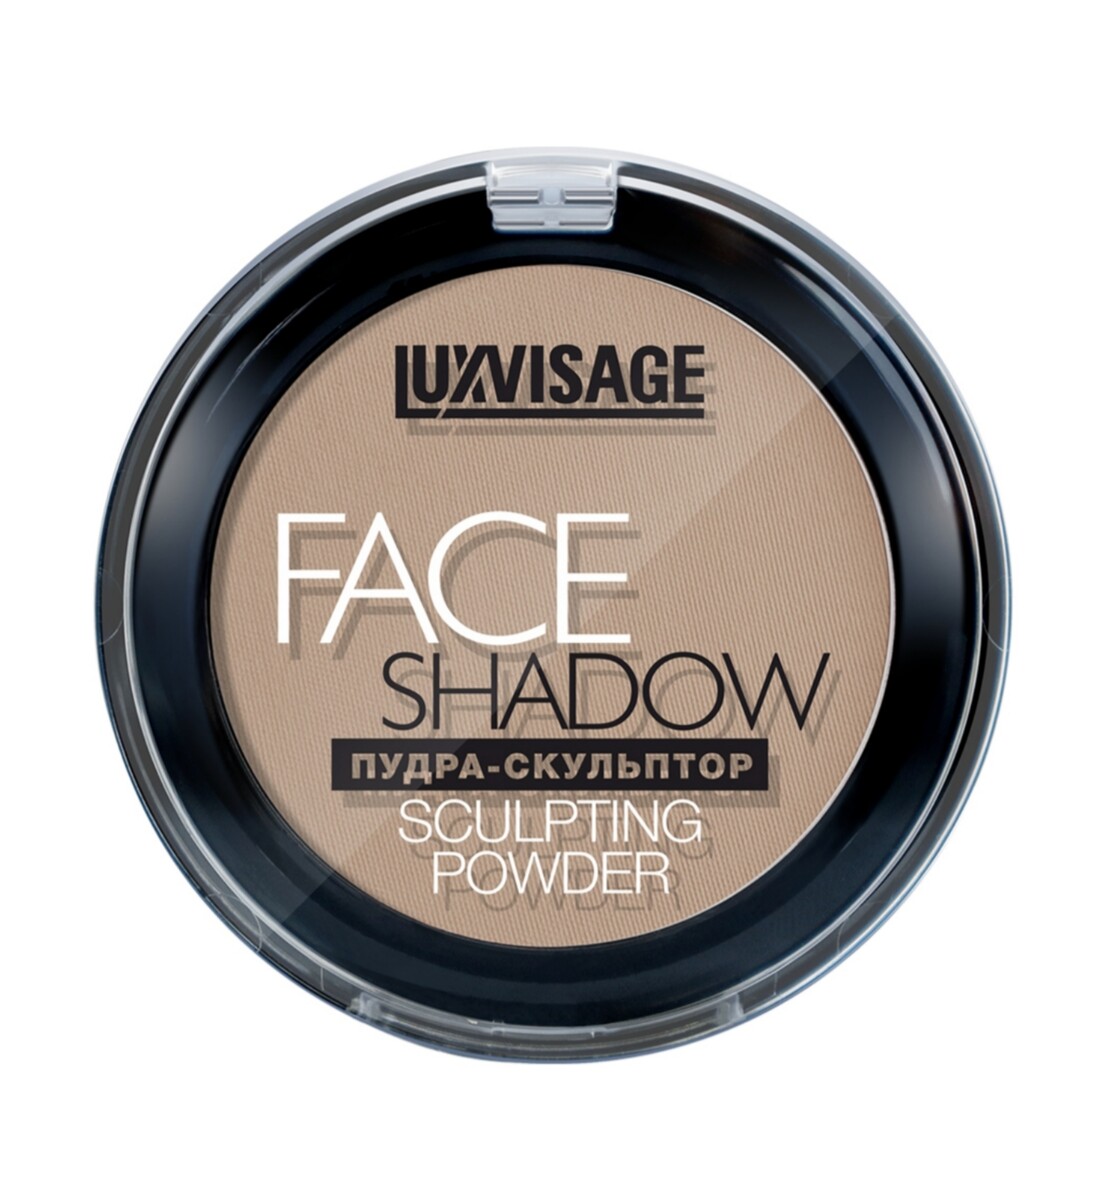 Luxvisage пудра-скульптор luxvisage face shadow, тон 10 warm beige кроссовки мужские saucony shadow 6000 коричневый